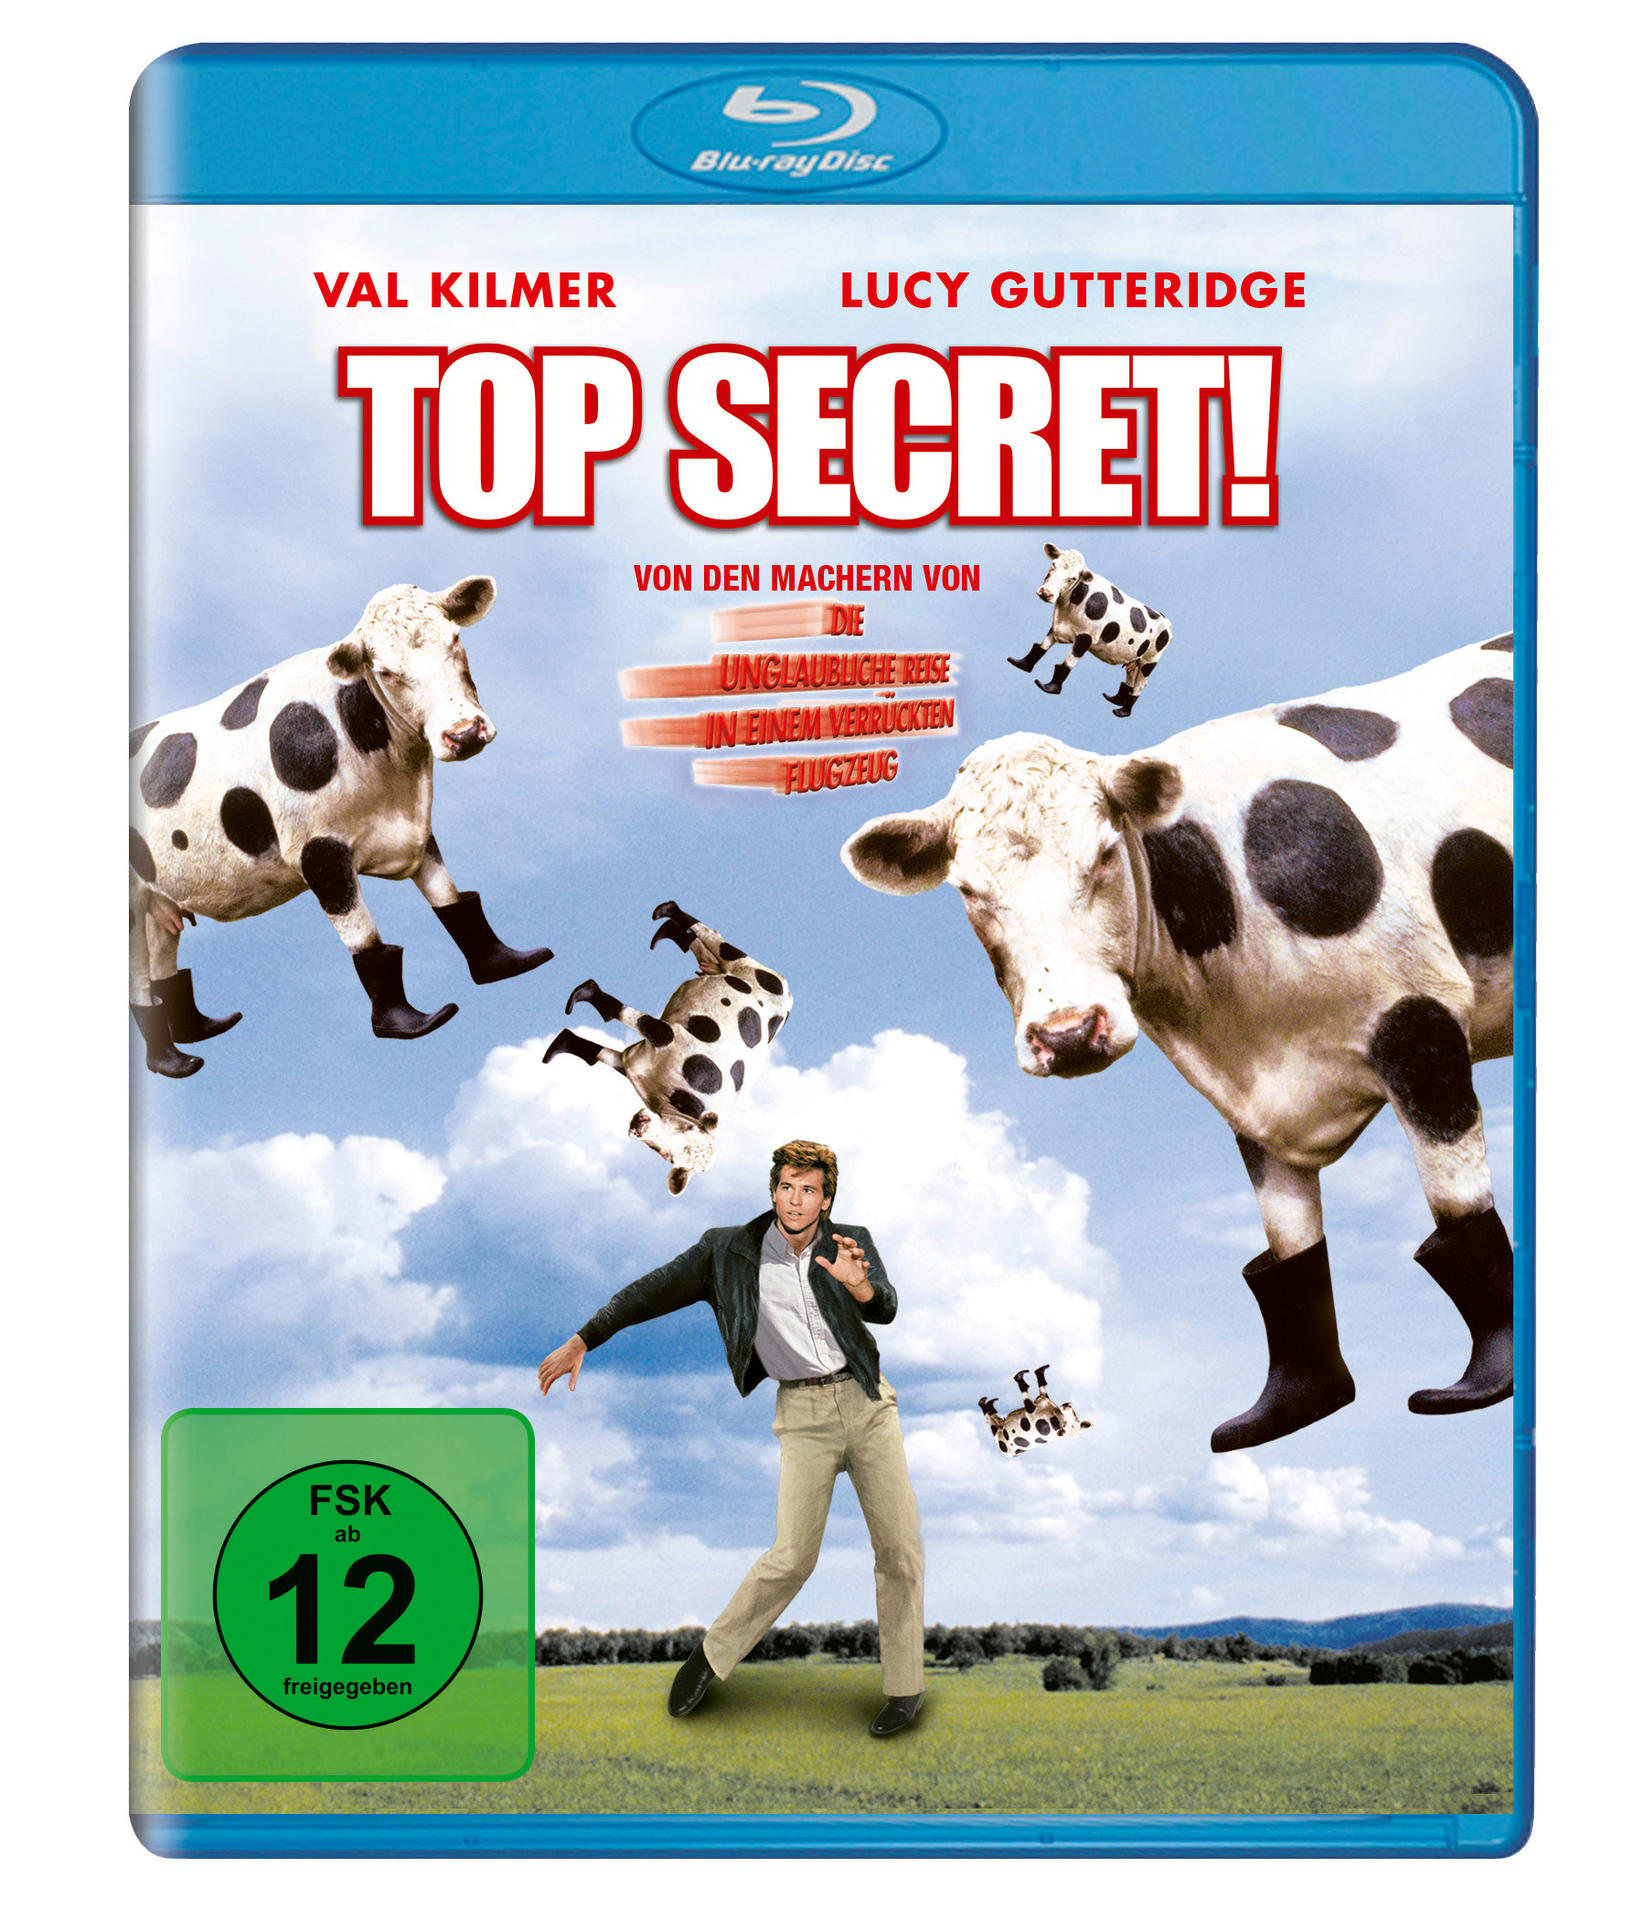 Secret! Blu-ray Top